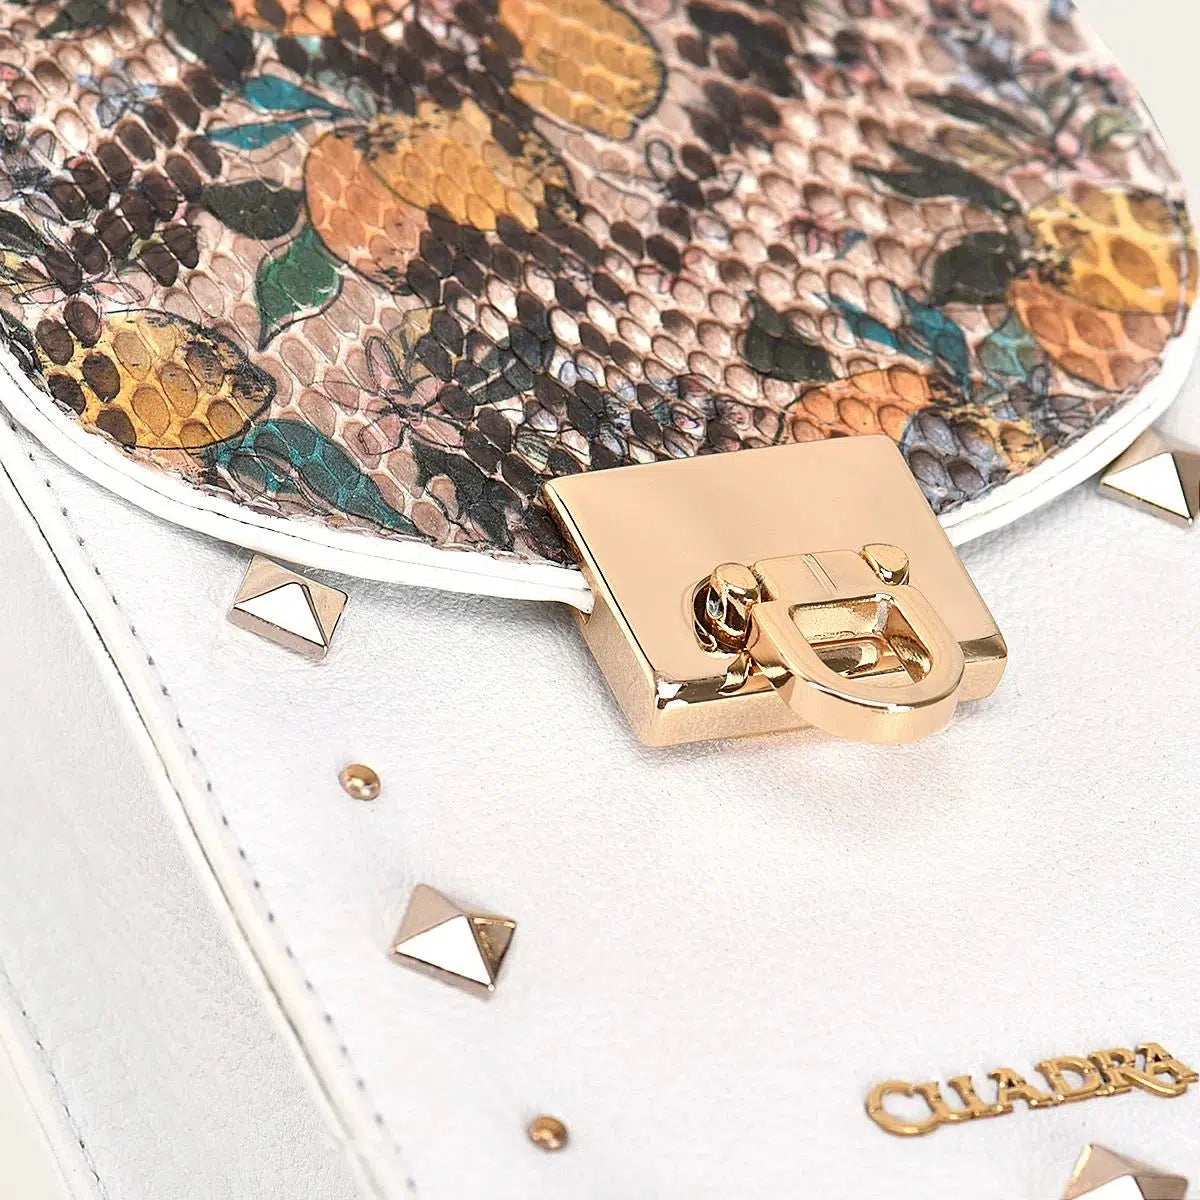 BOD38PI - Cuadra white casual fashion python smartphone wallet bag for women-CUADRA-Kuet-Cuadra-Boots